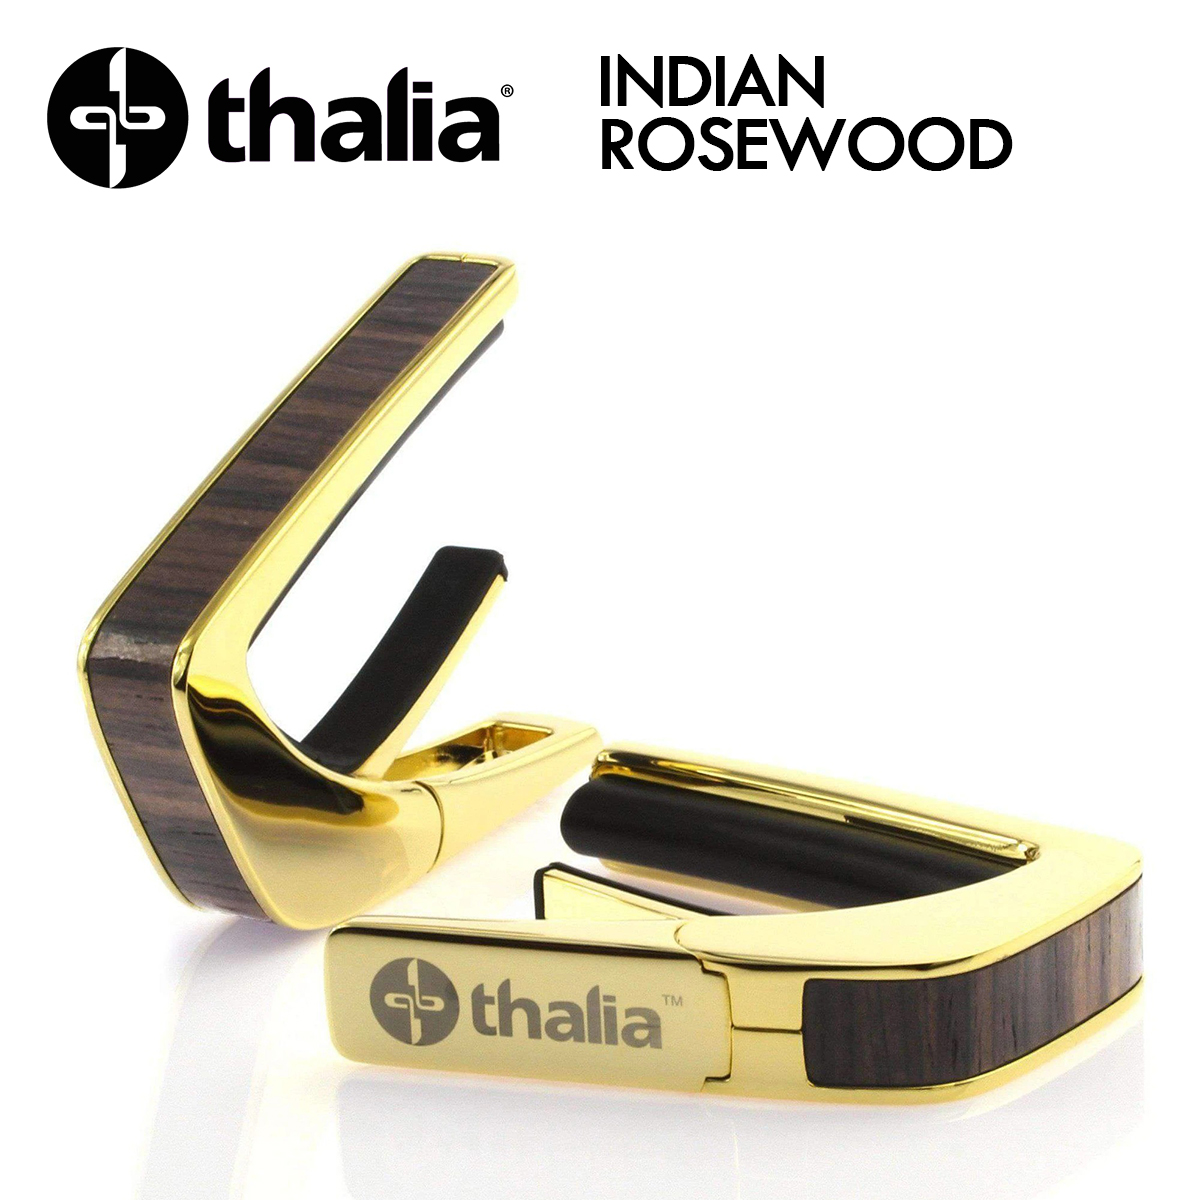 Thalia Capos Exotic Wood INDIAN ROSEWOOD -24K Gold- 新品 ギター用カポタスト[タリア][ローズウッド][ゴールド,金][Electric,Acoustic,Bass,Guitar]